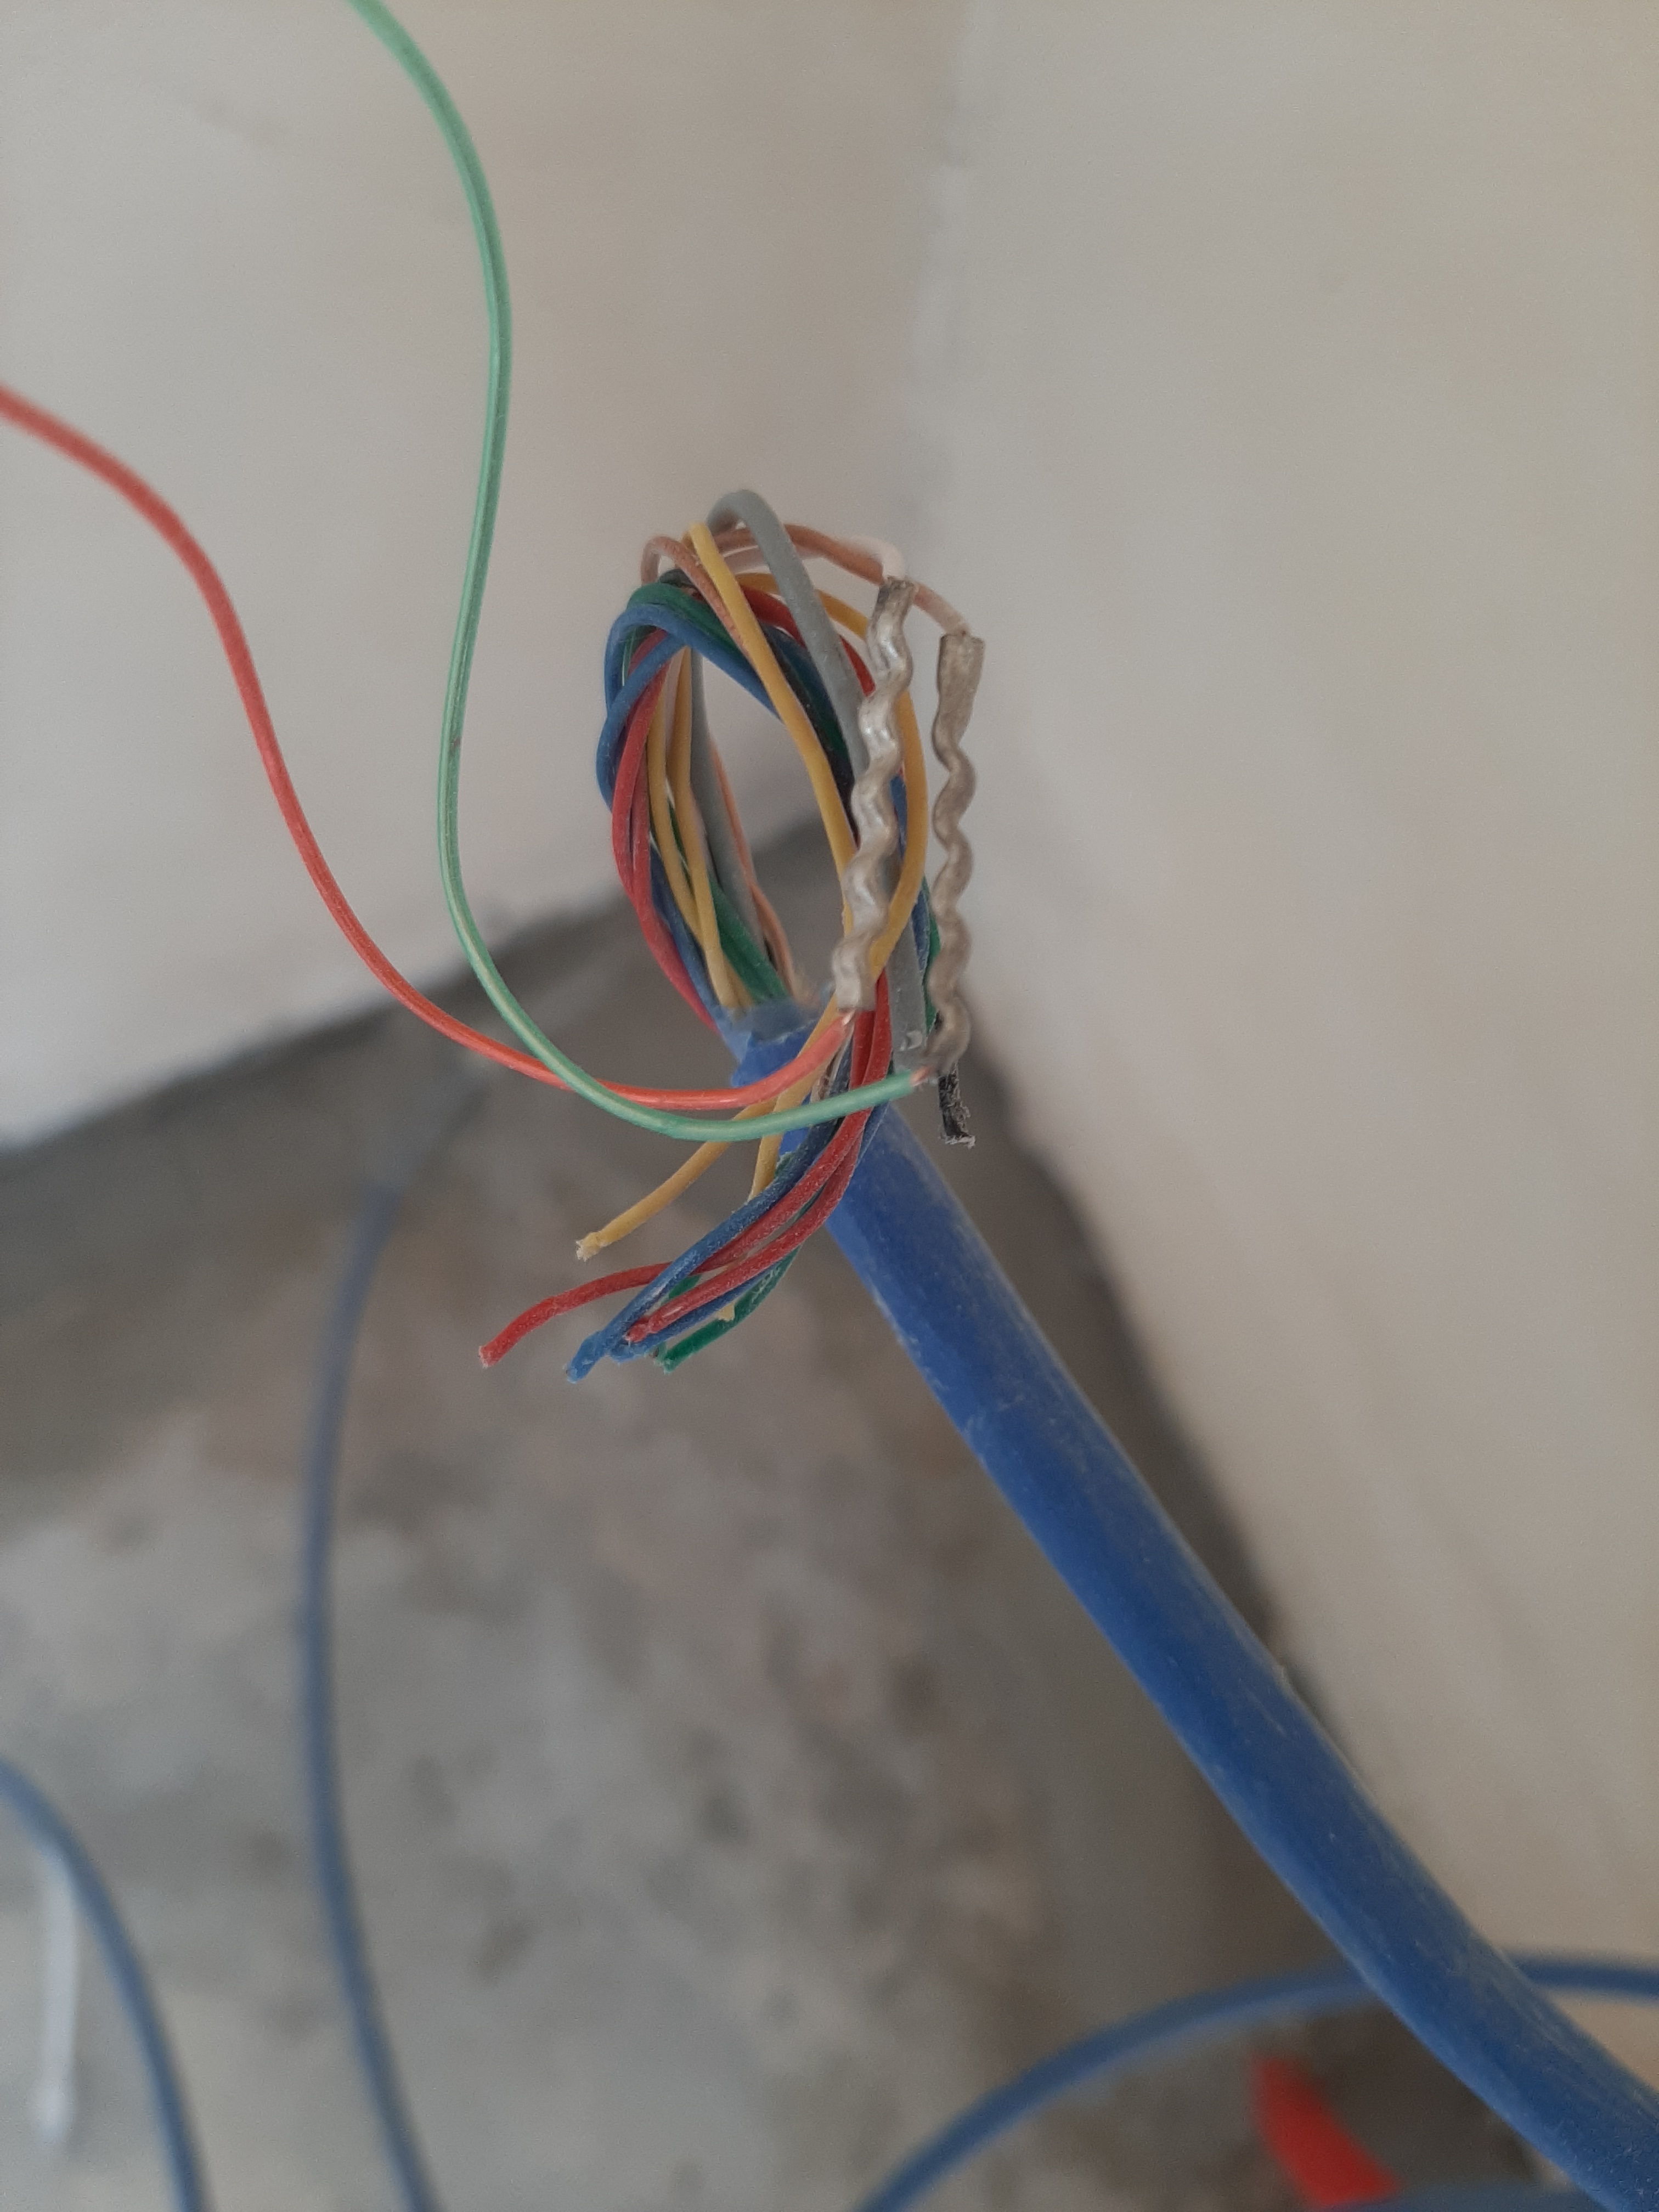 Kabel kapot werkzaamheden | KPN Community